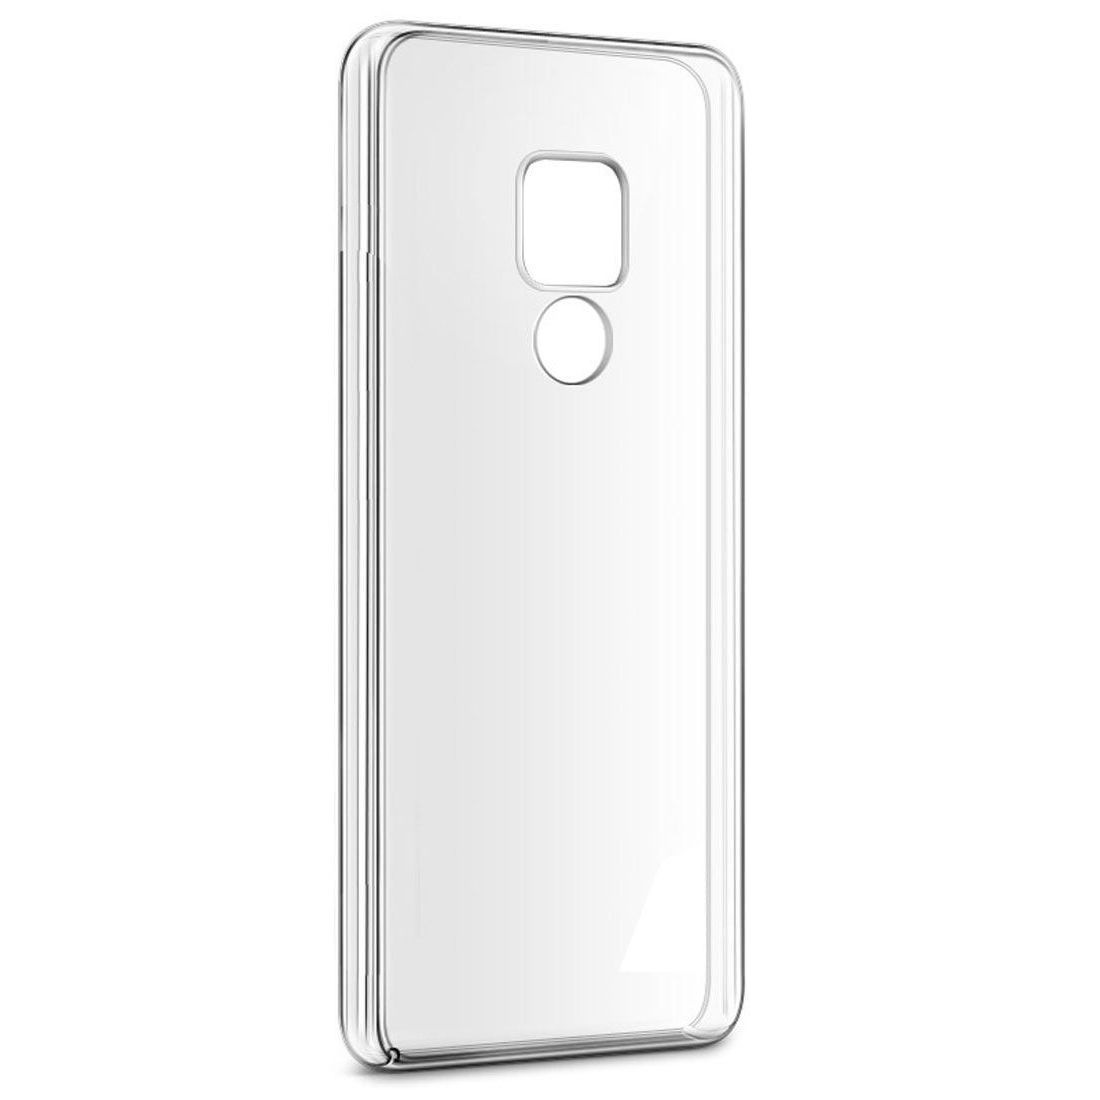 Huawei Mate 20 X Slim case 1 mm Transparent